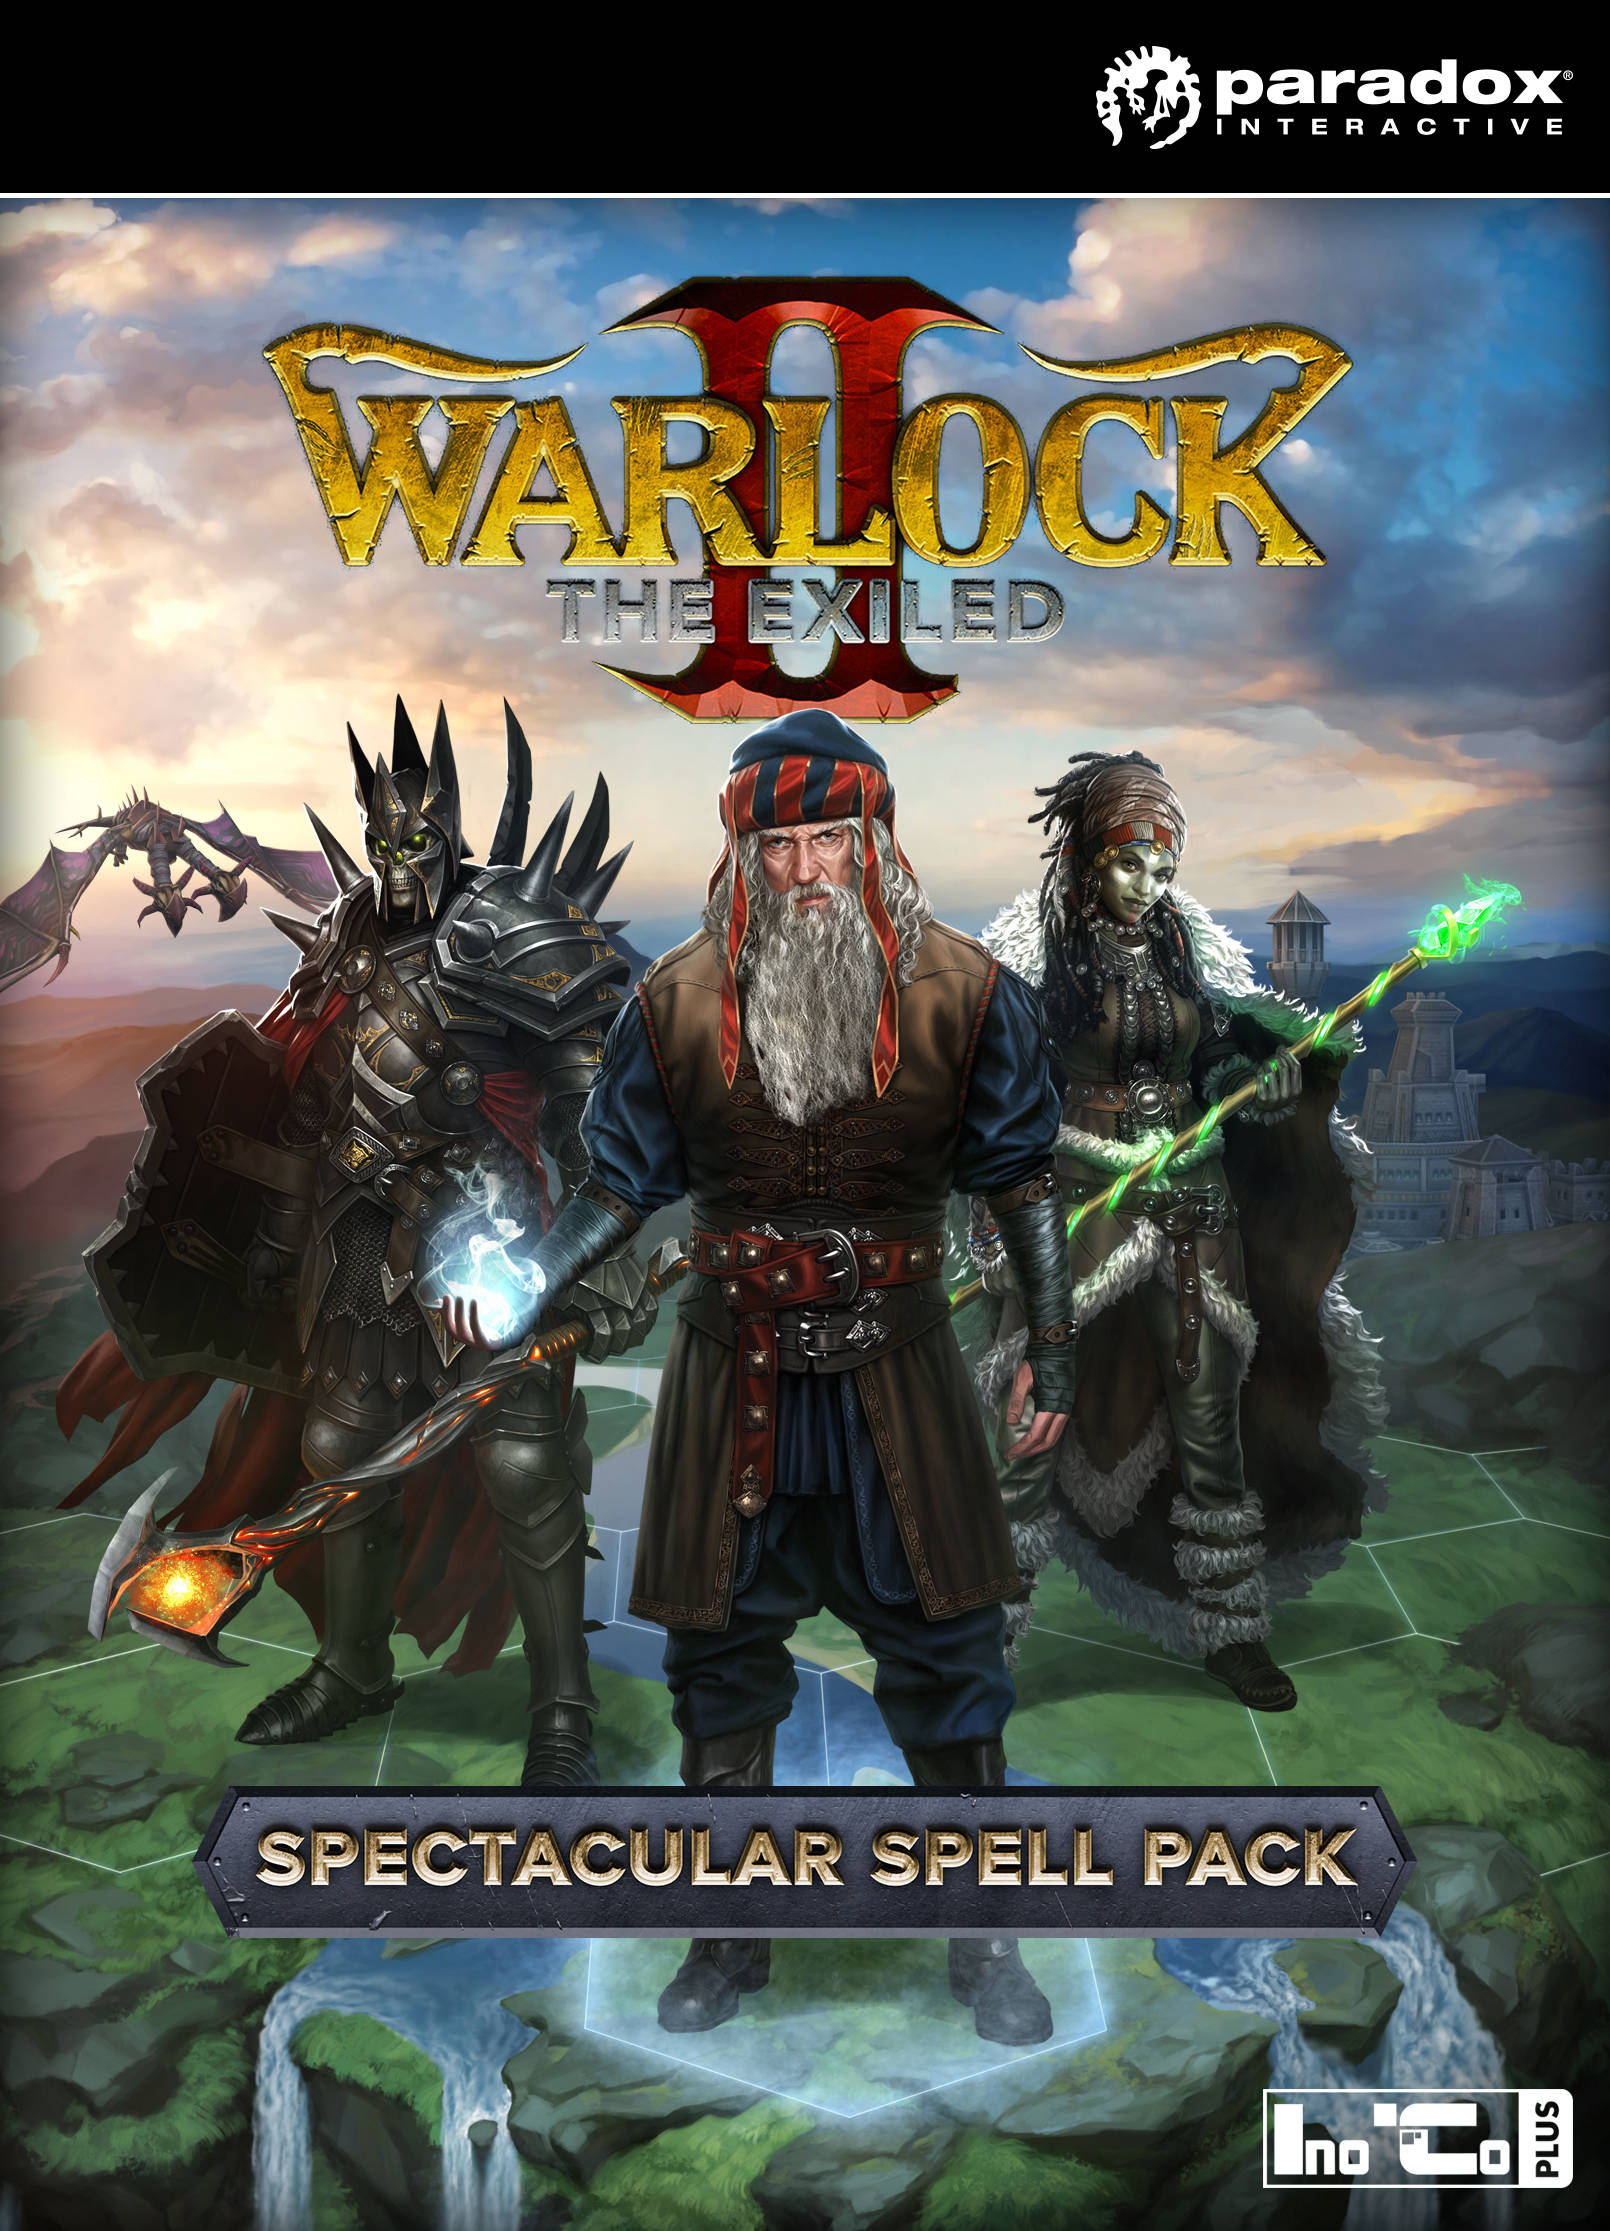 Warlock 2: Spectacular Spell Pack